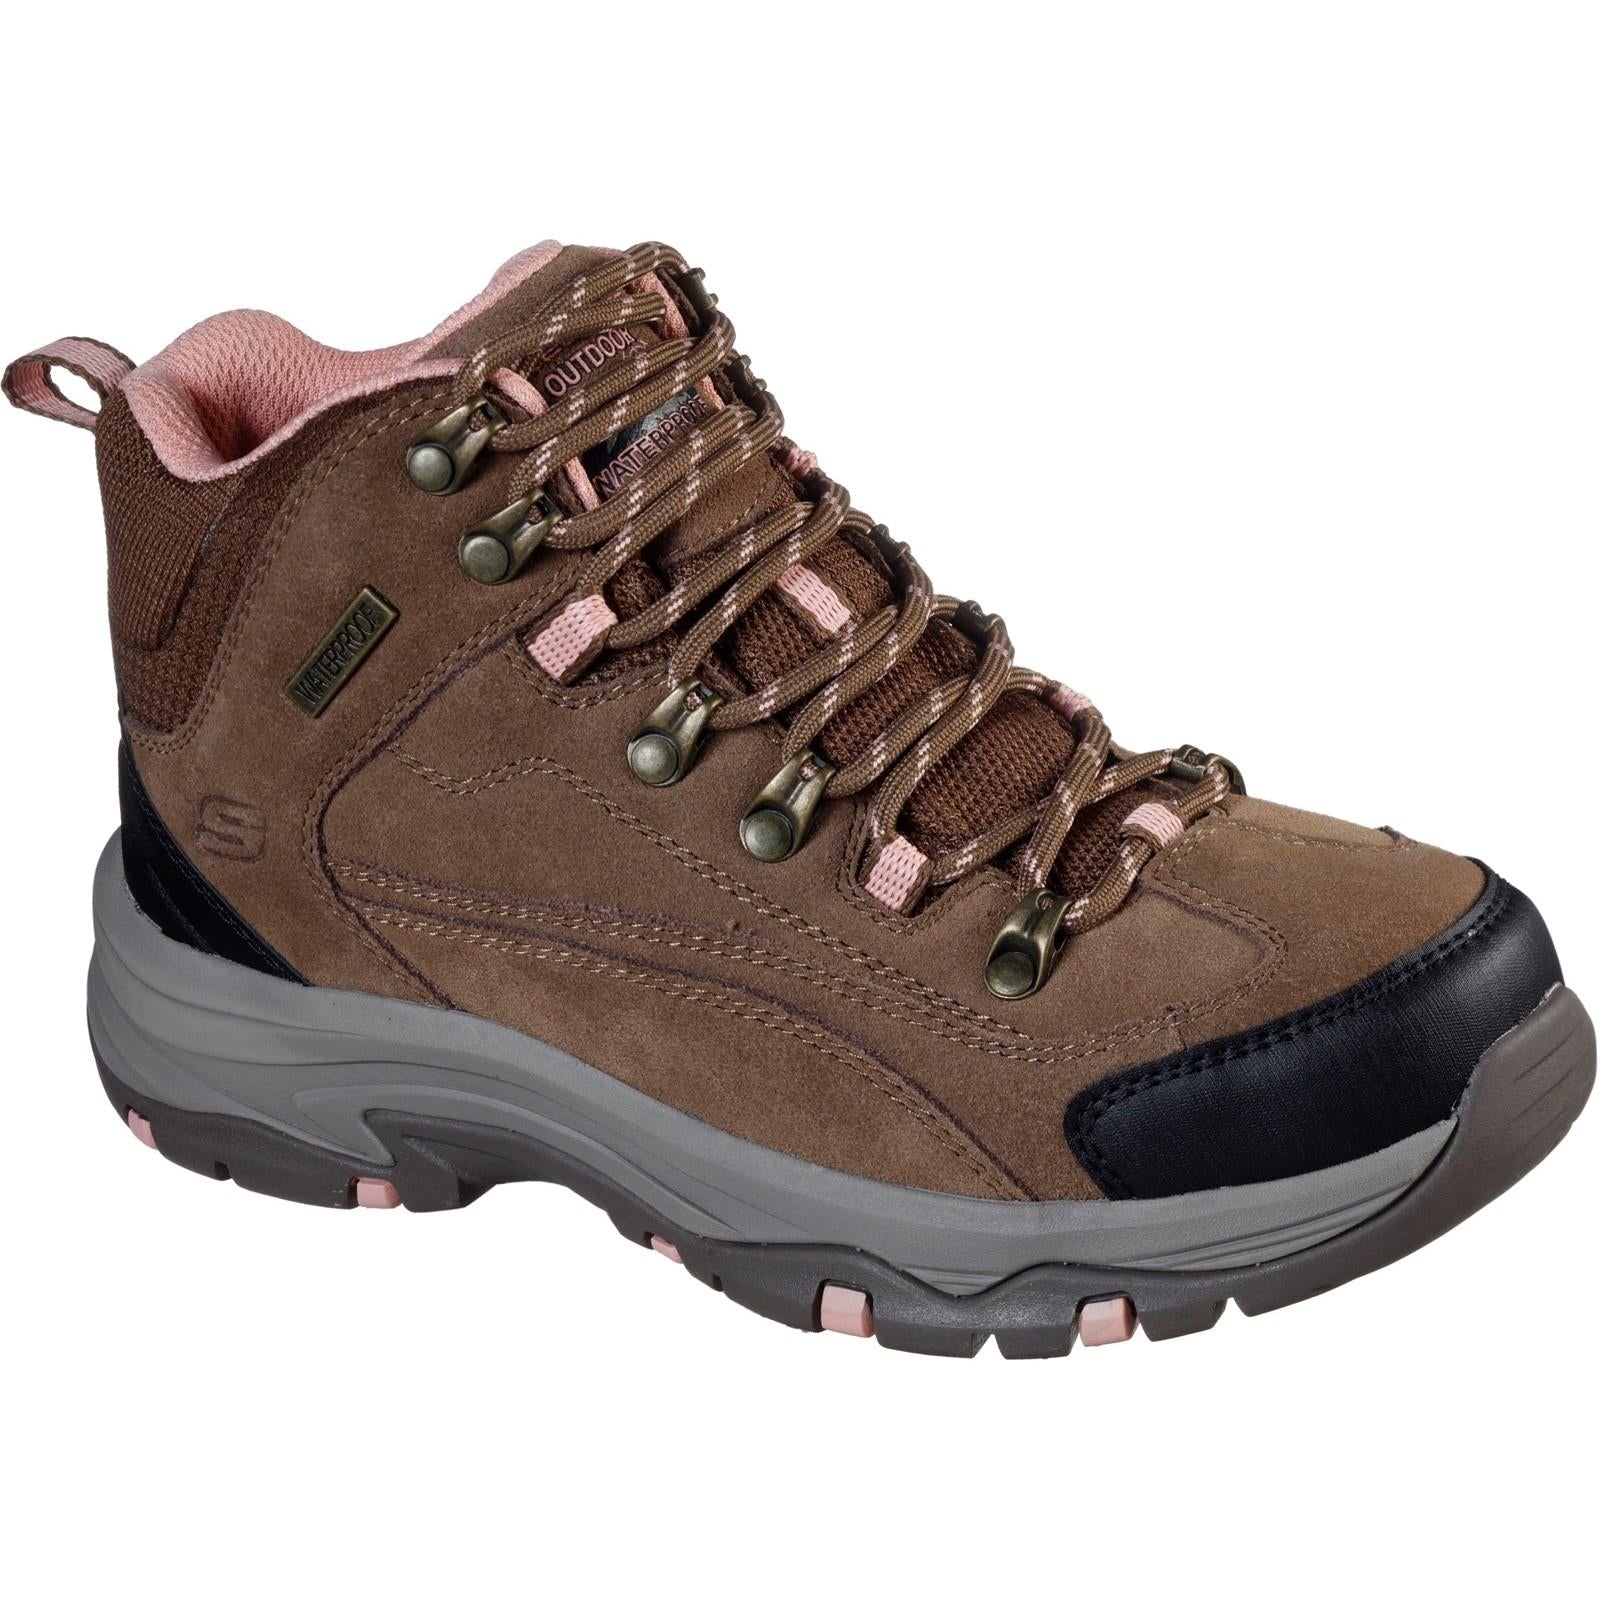 Skechers Trego Alpine Trail brown waterproof hiking woman's boots #167004